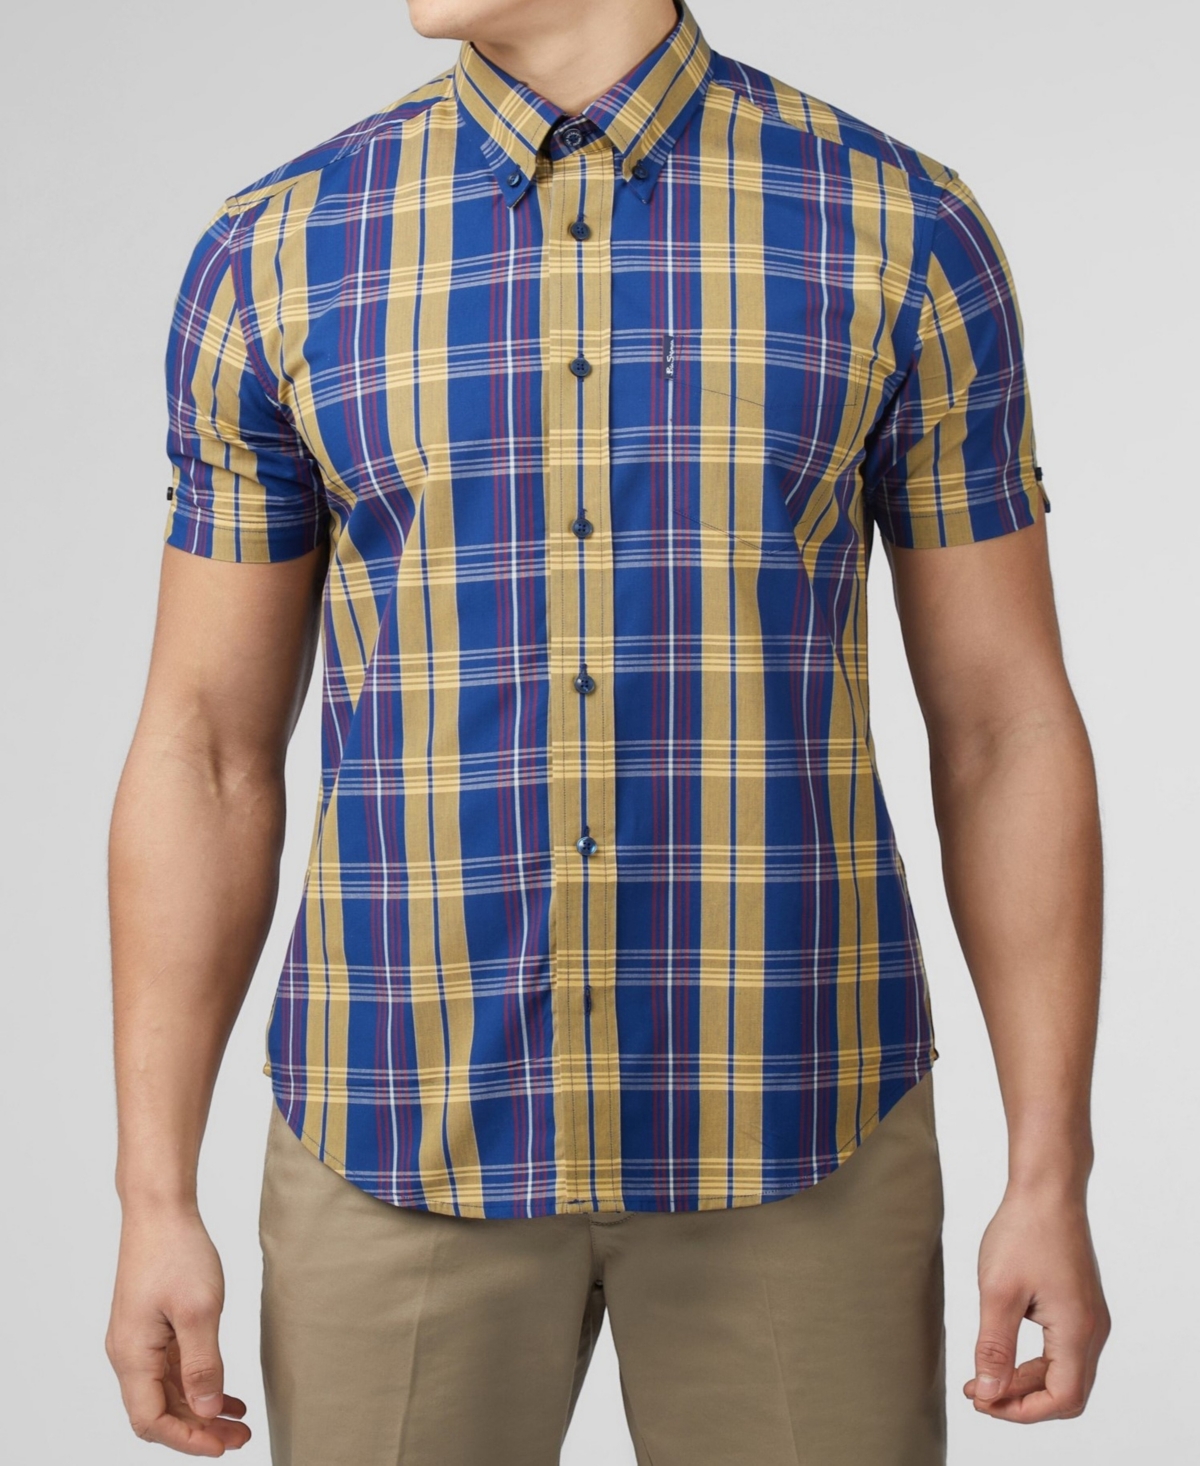 Men's Irregular Check Short Sleeve Shirt - Twilight